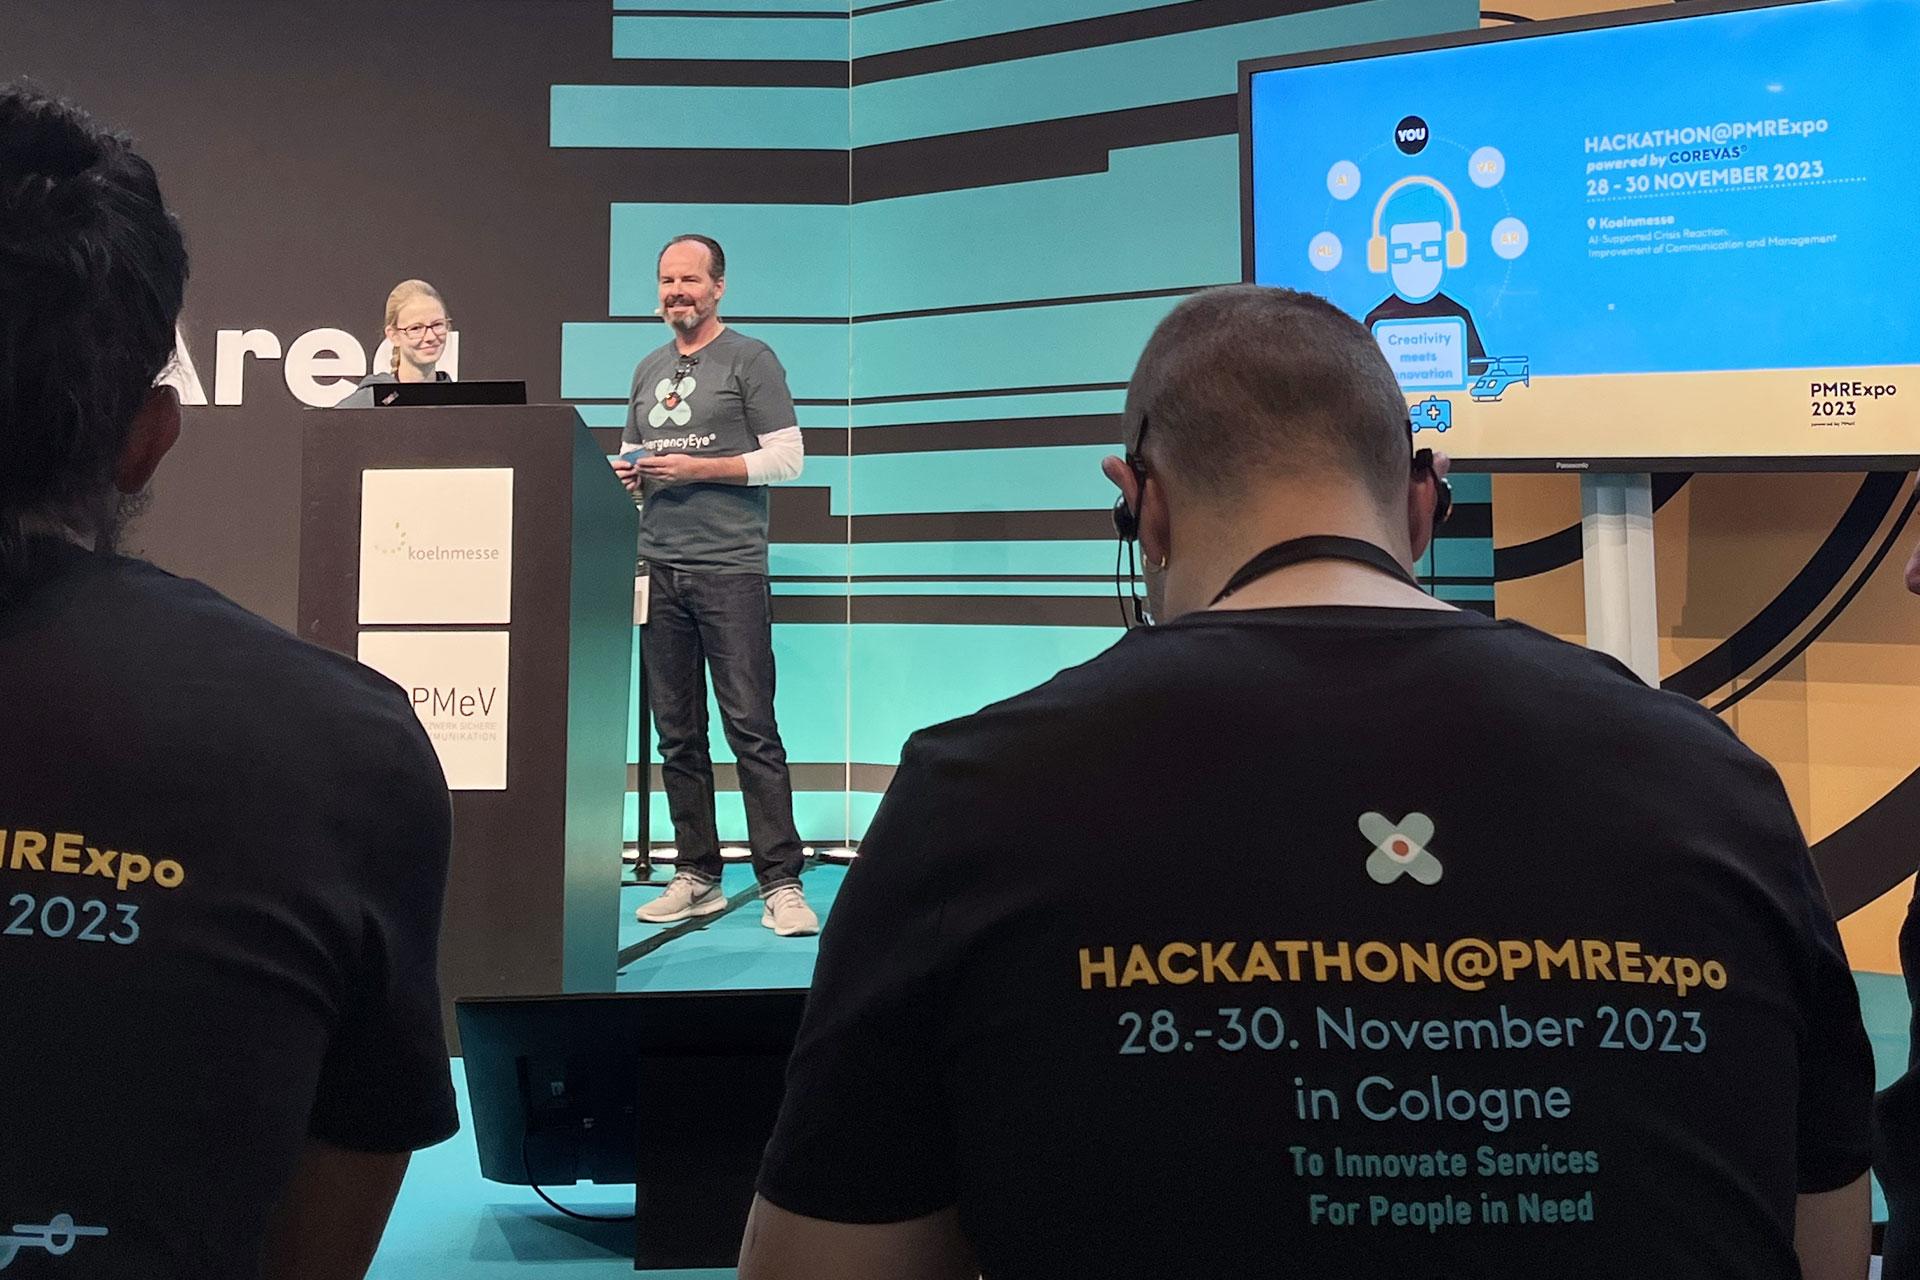 Hackathon@PMRExpo 2023